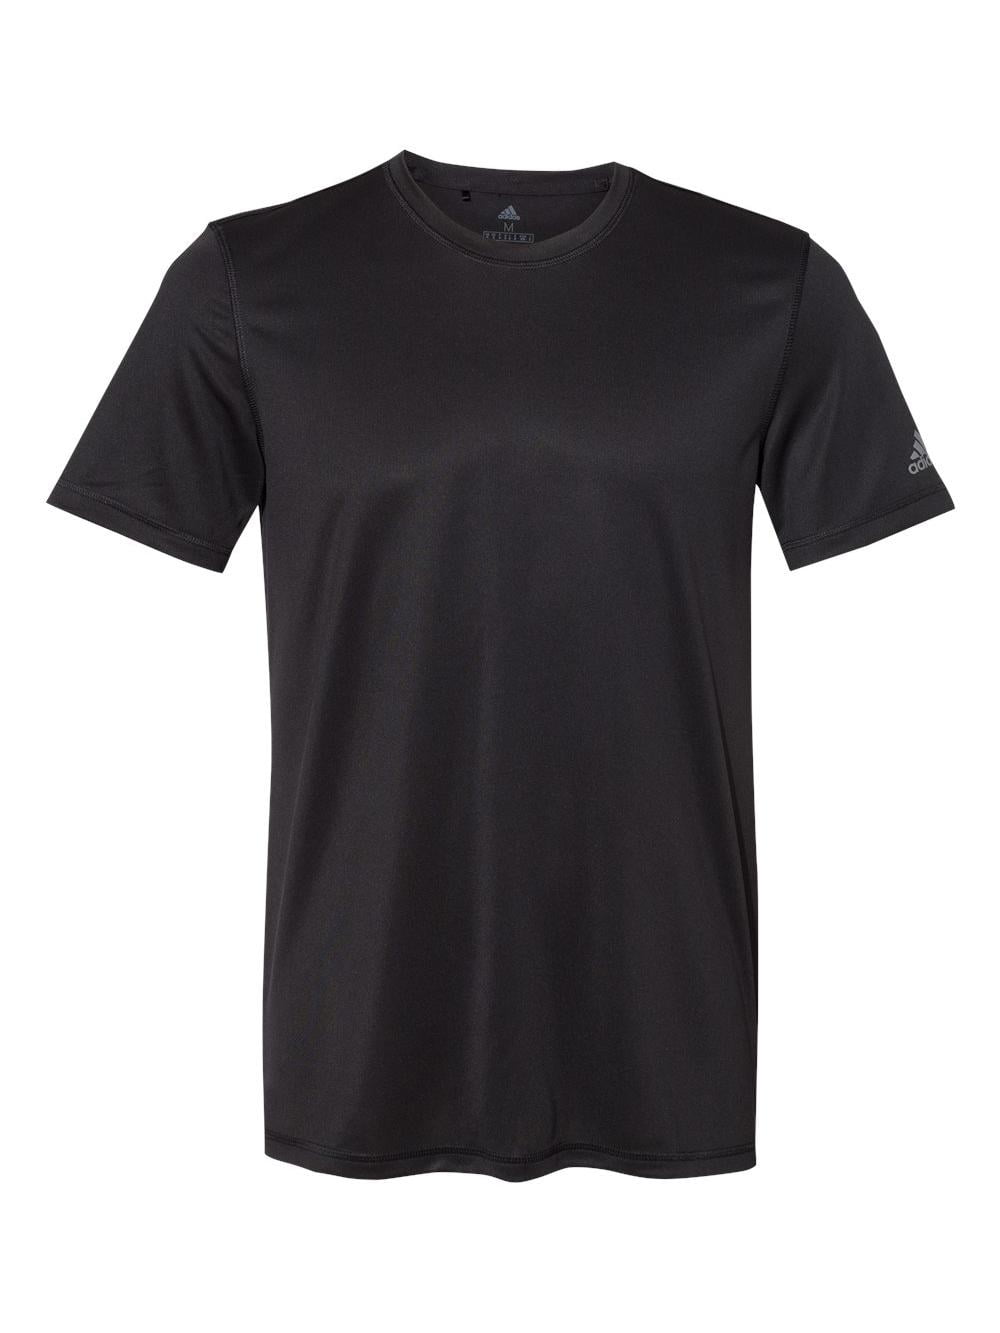 Adidas - Sport T-Shirt - A376 - Black - Size: 3XL | Sport-T-Shirts